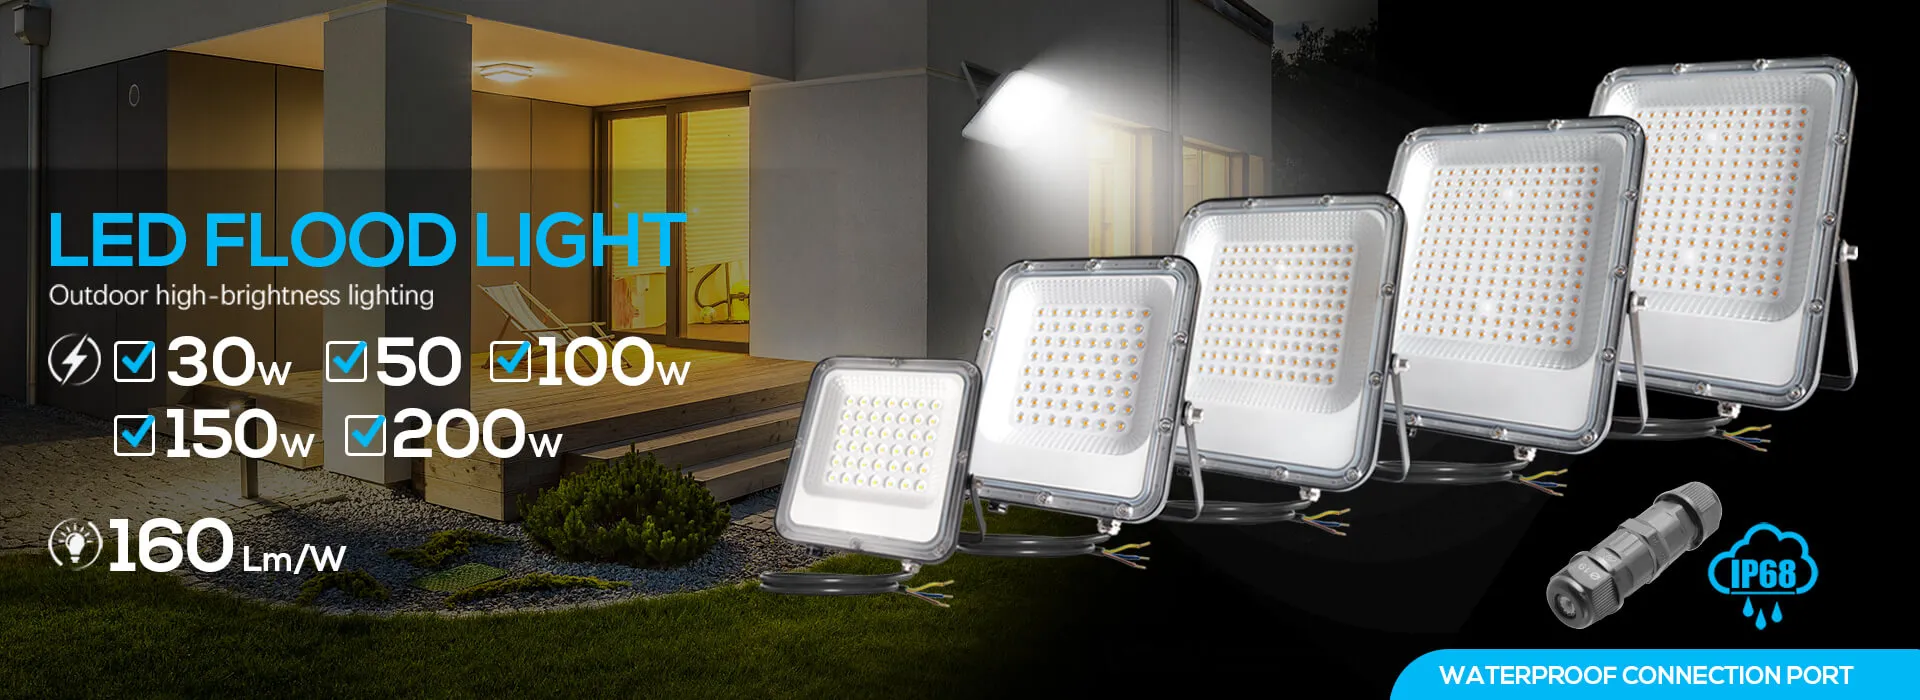 LED Flood Light Suppliers